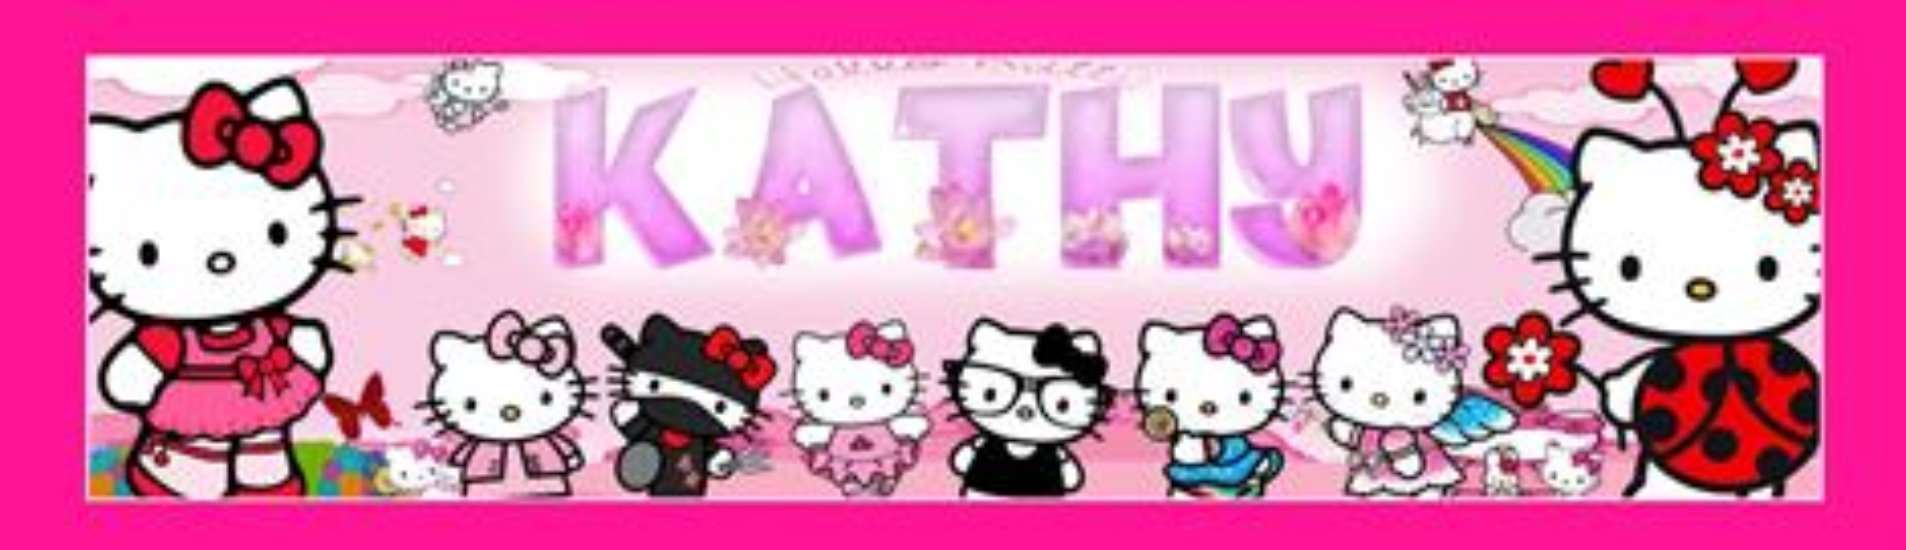 Poster Hello Kitty 